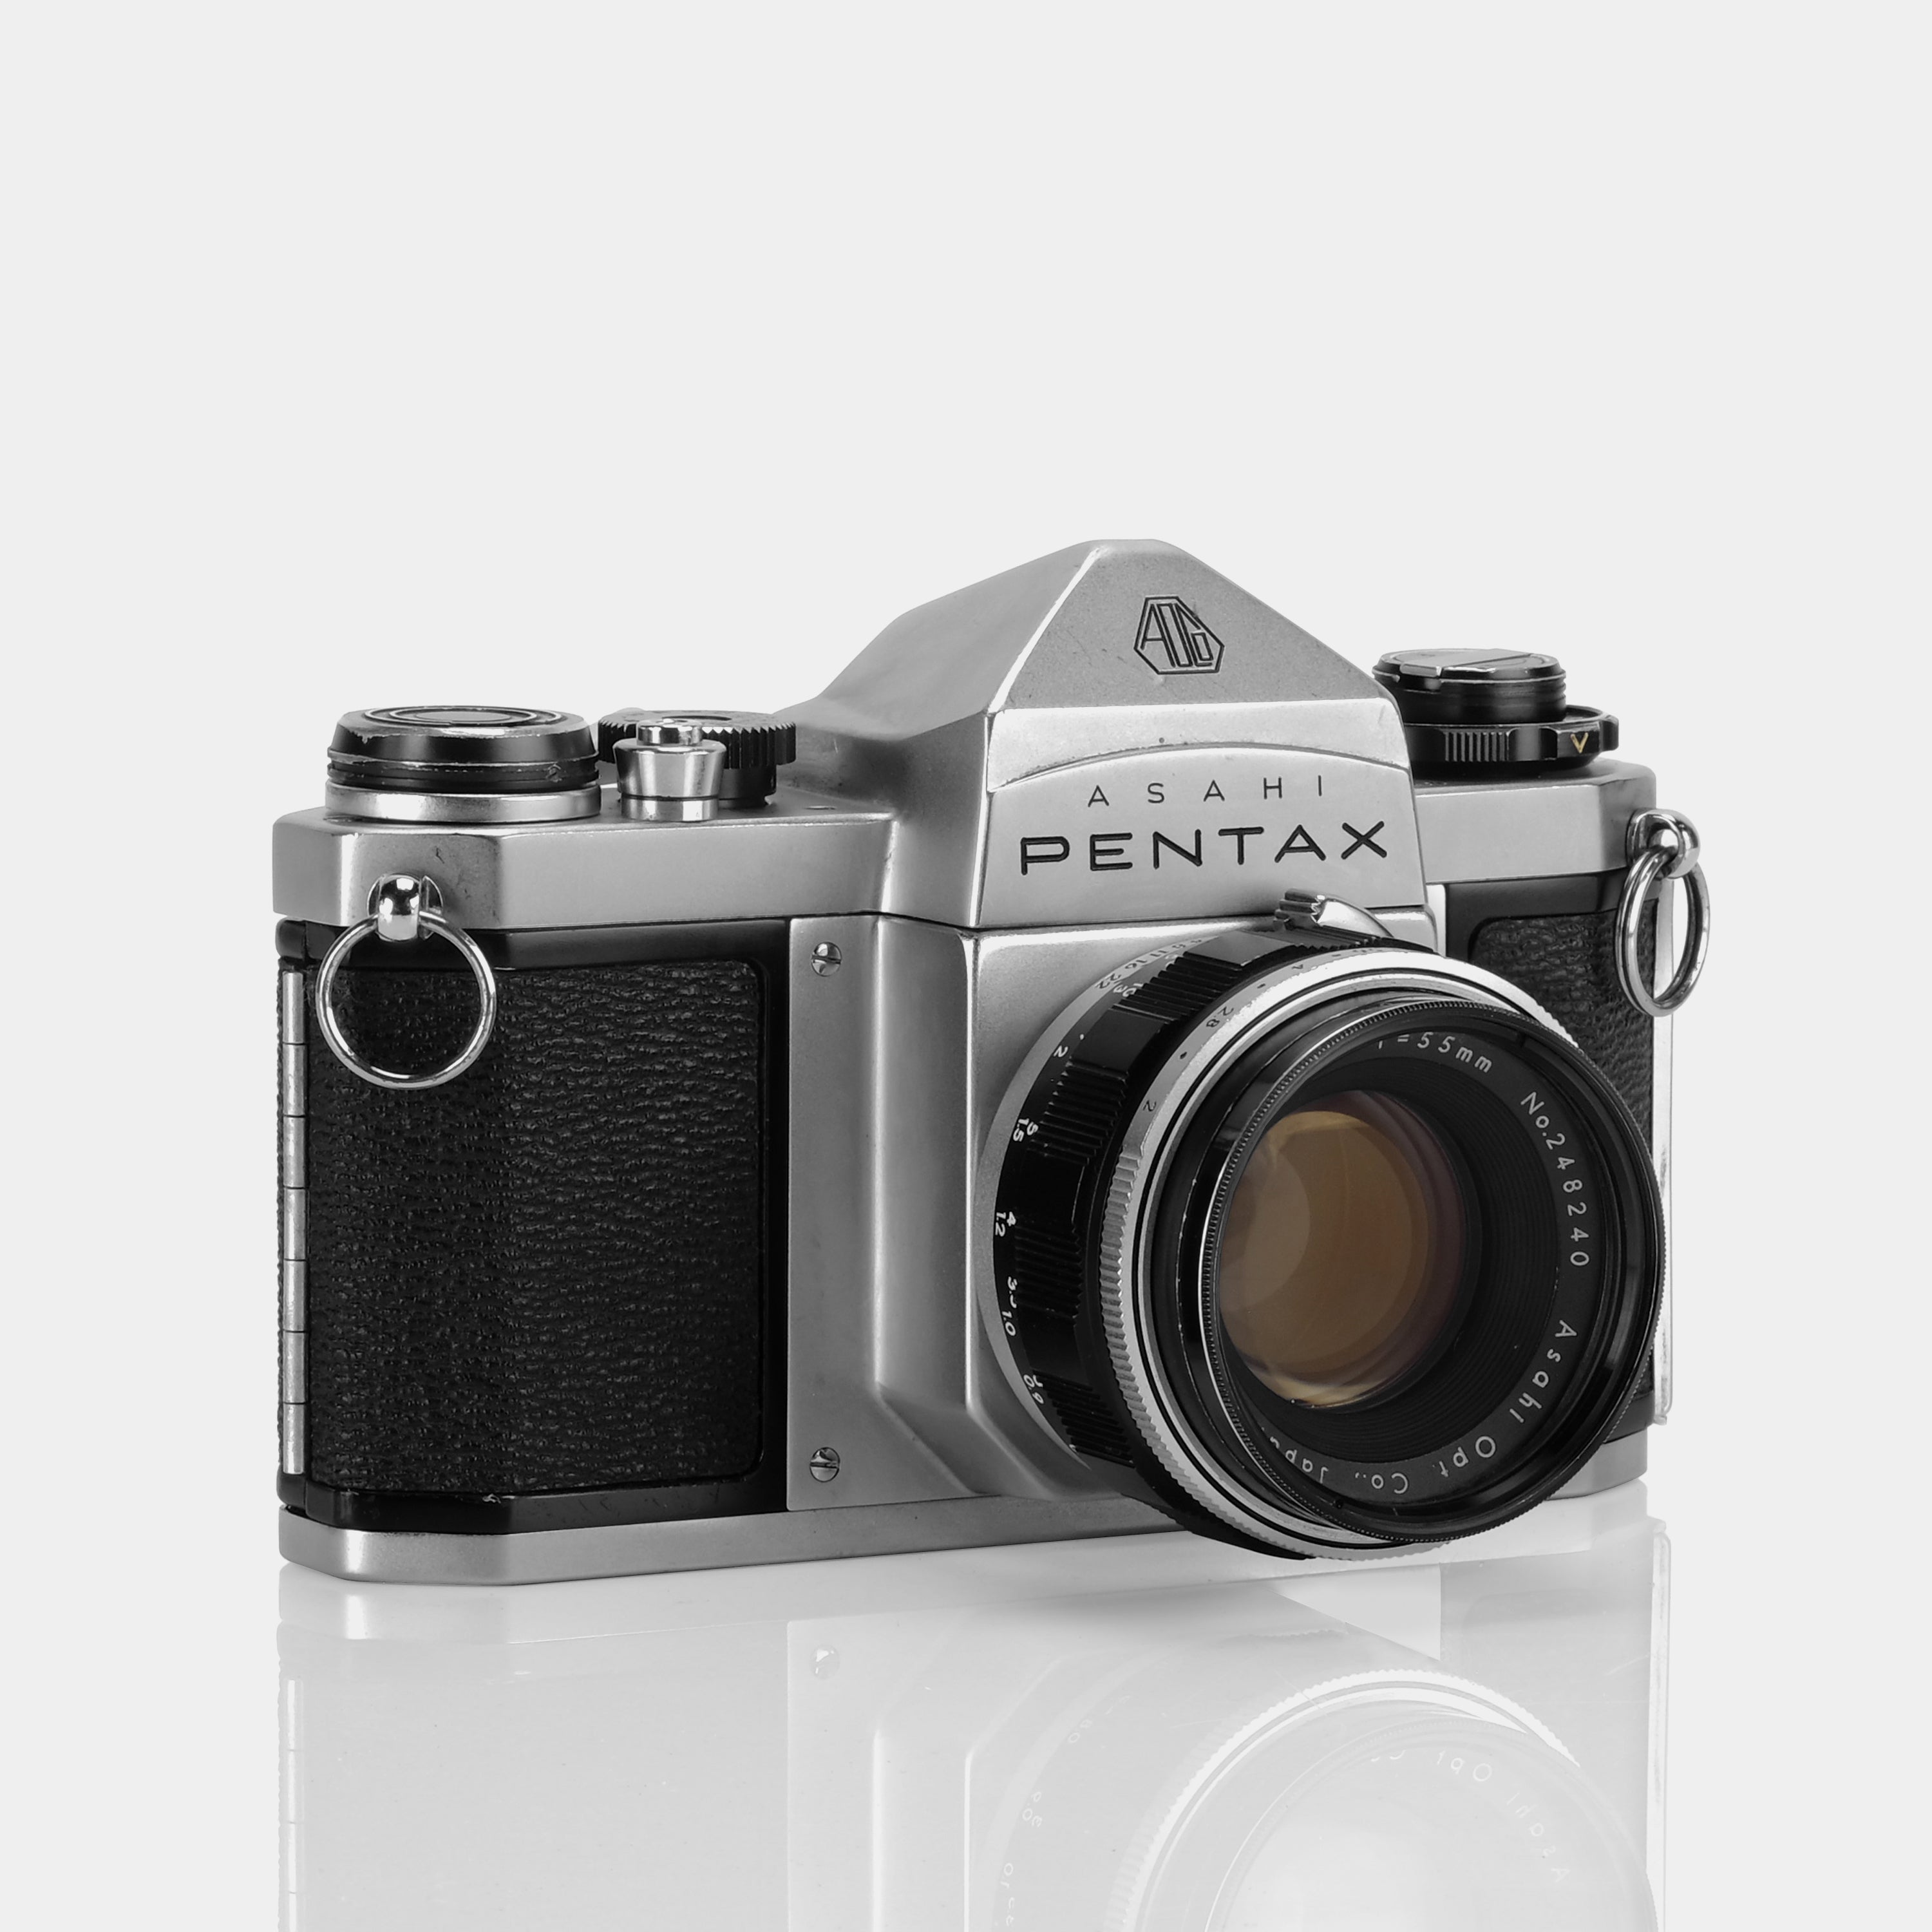 Asahi Pentax SV 35mm SLR Film Camera